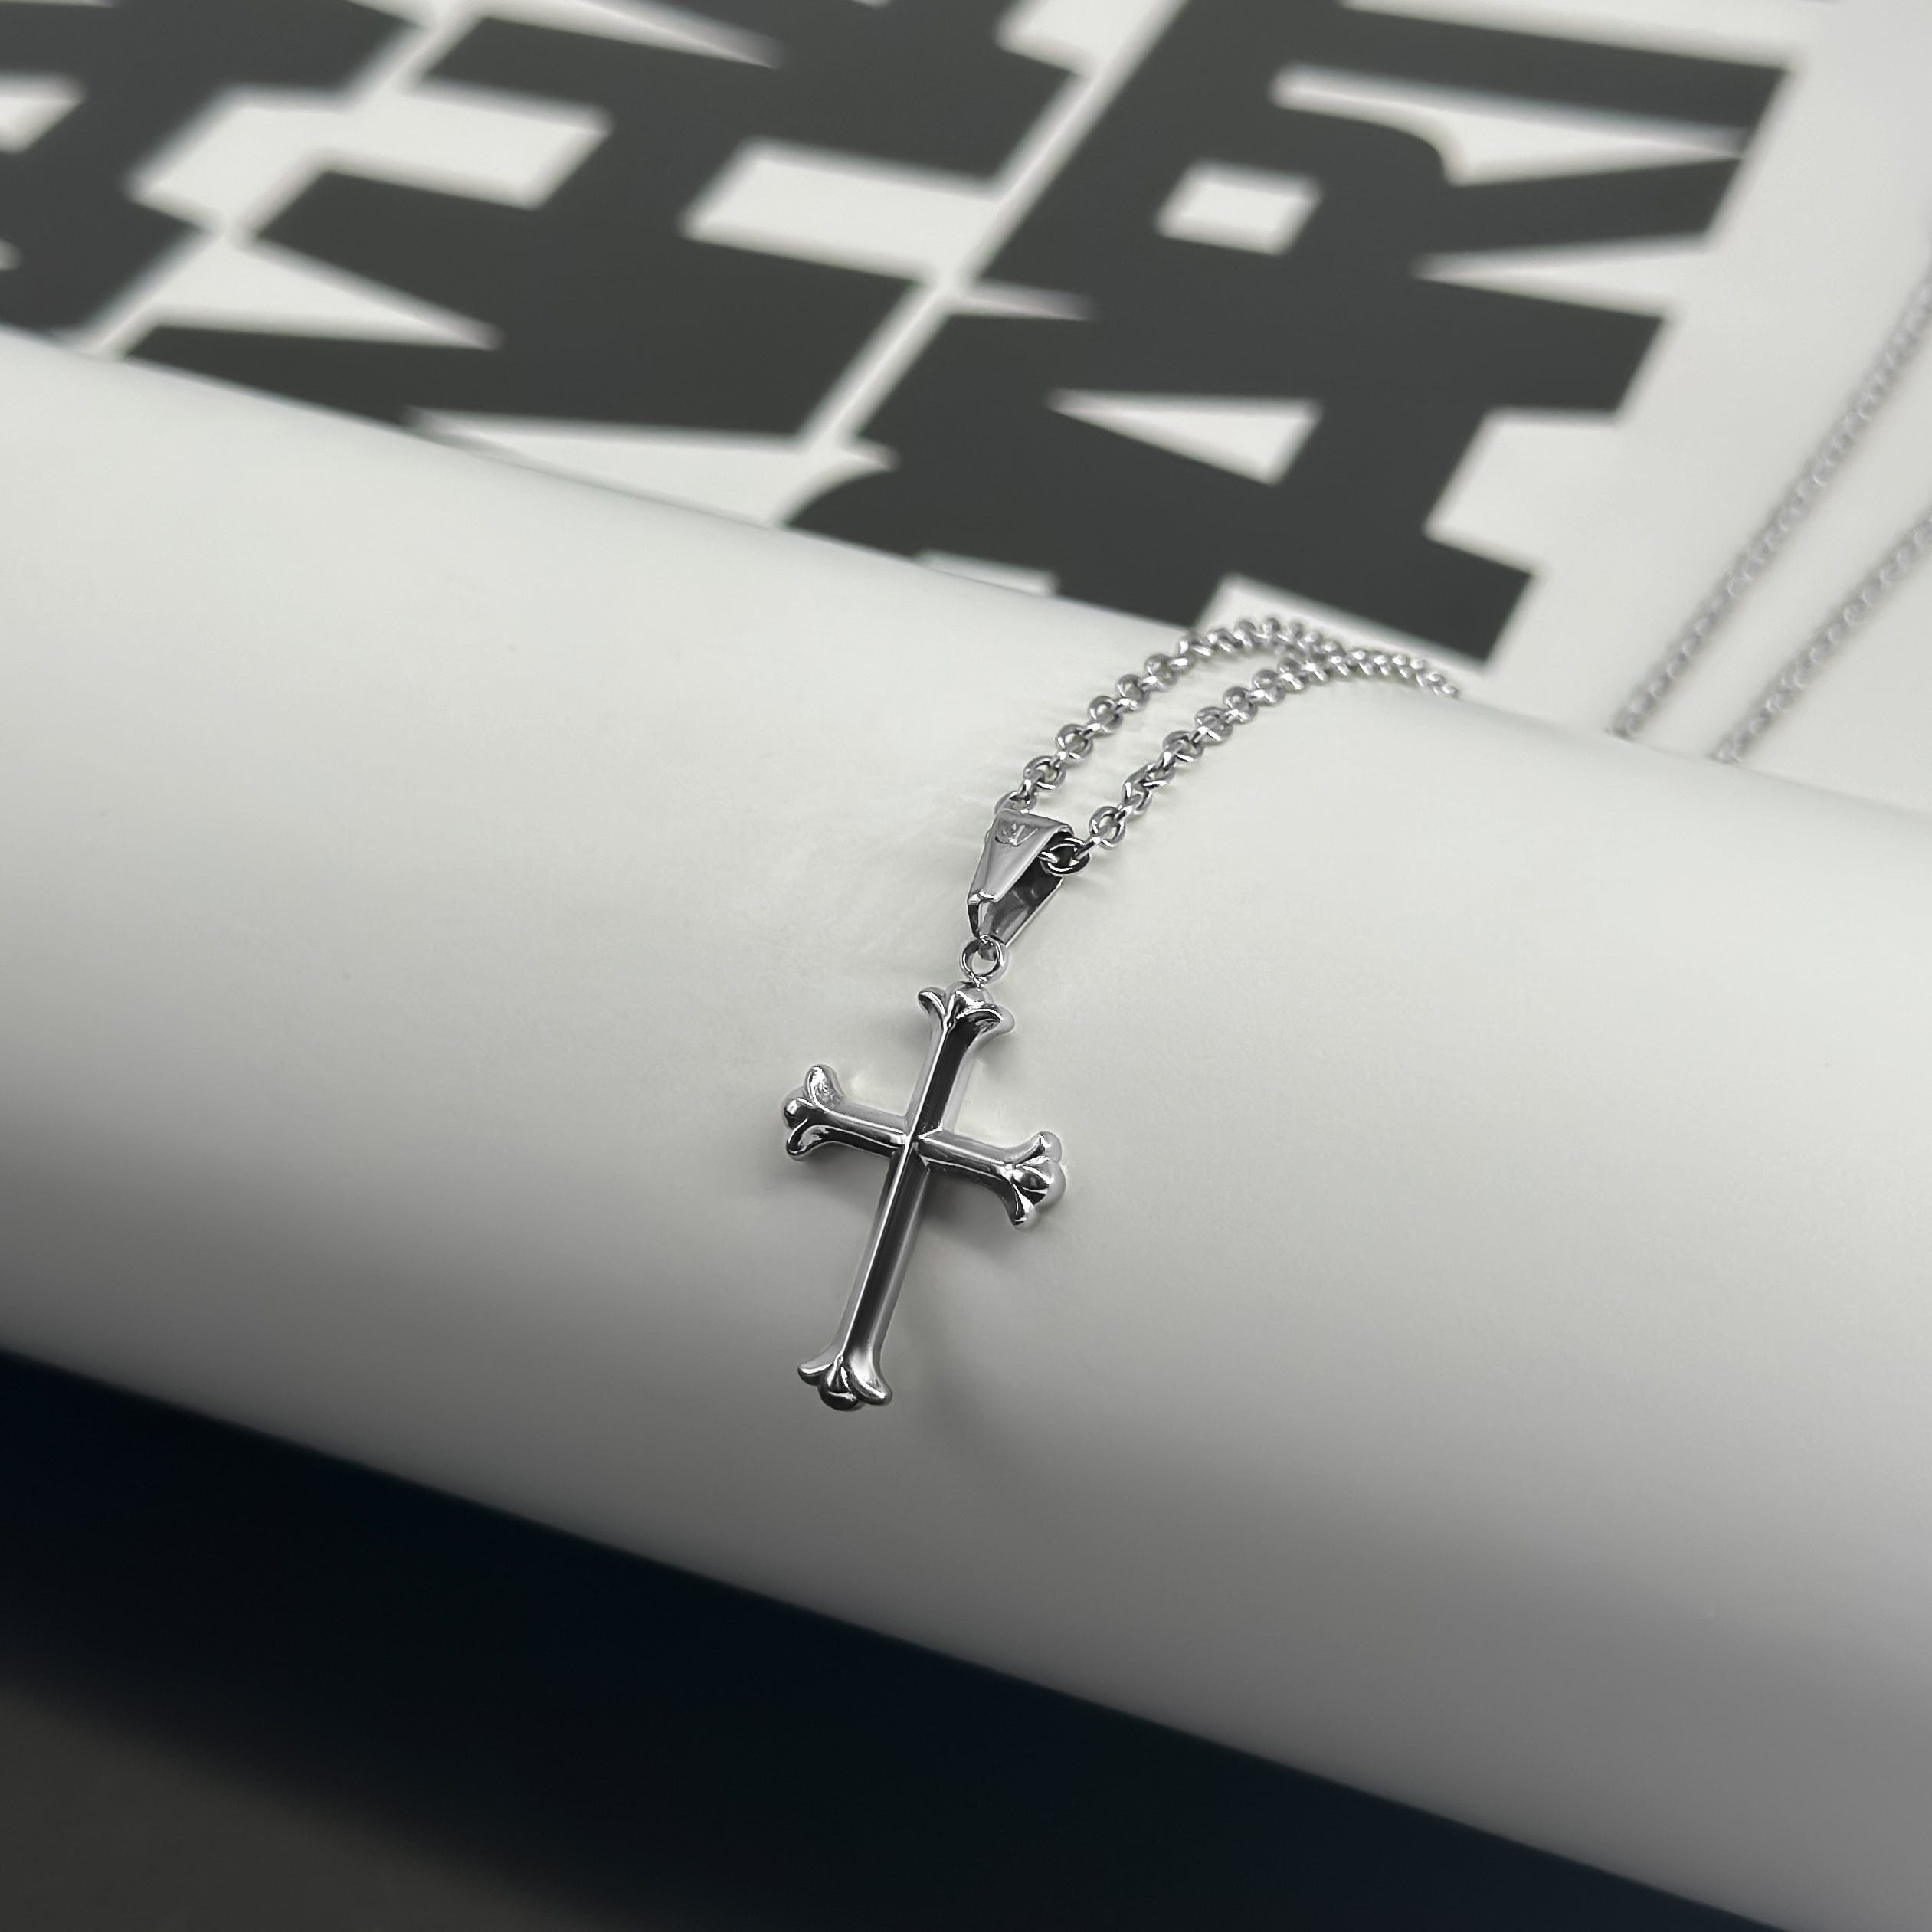 Chain with Pendant Cross Rolo Chain - Silver (2mm) - JVillion®